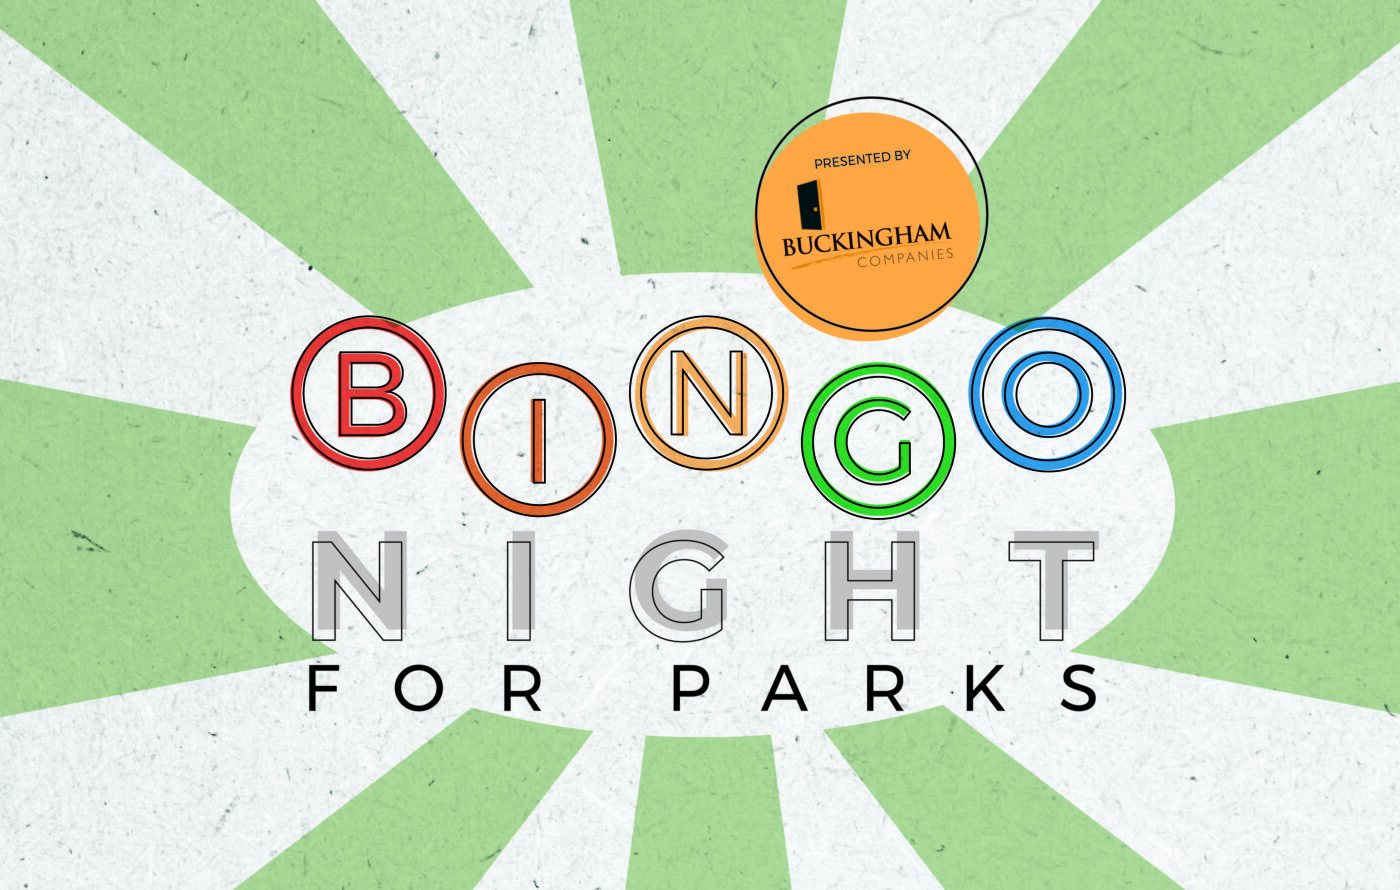 BINGO Night for Parks presented by Buckingham Companies